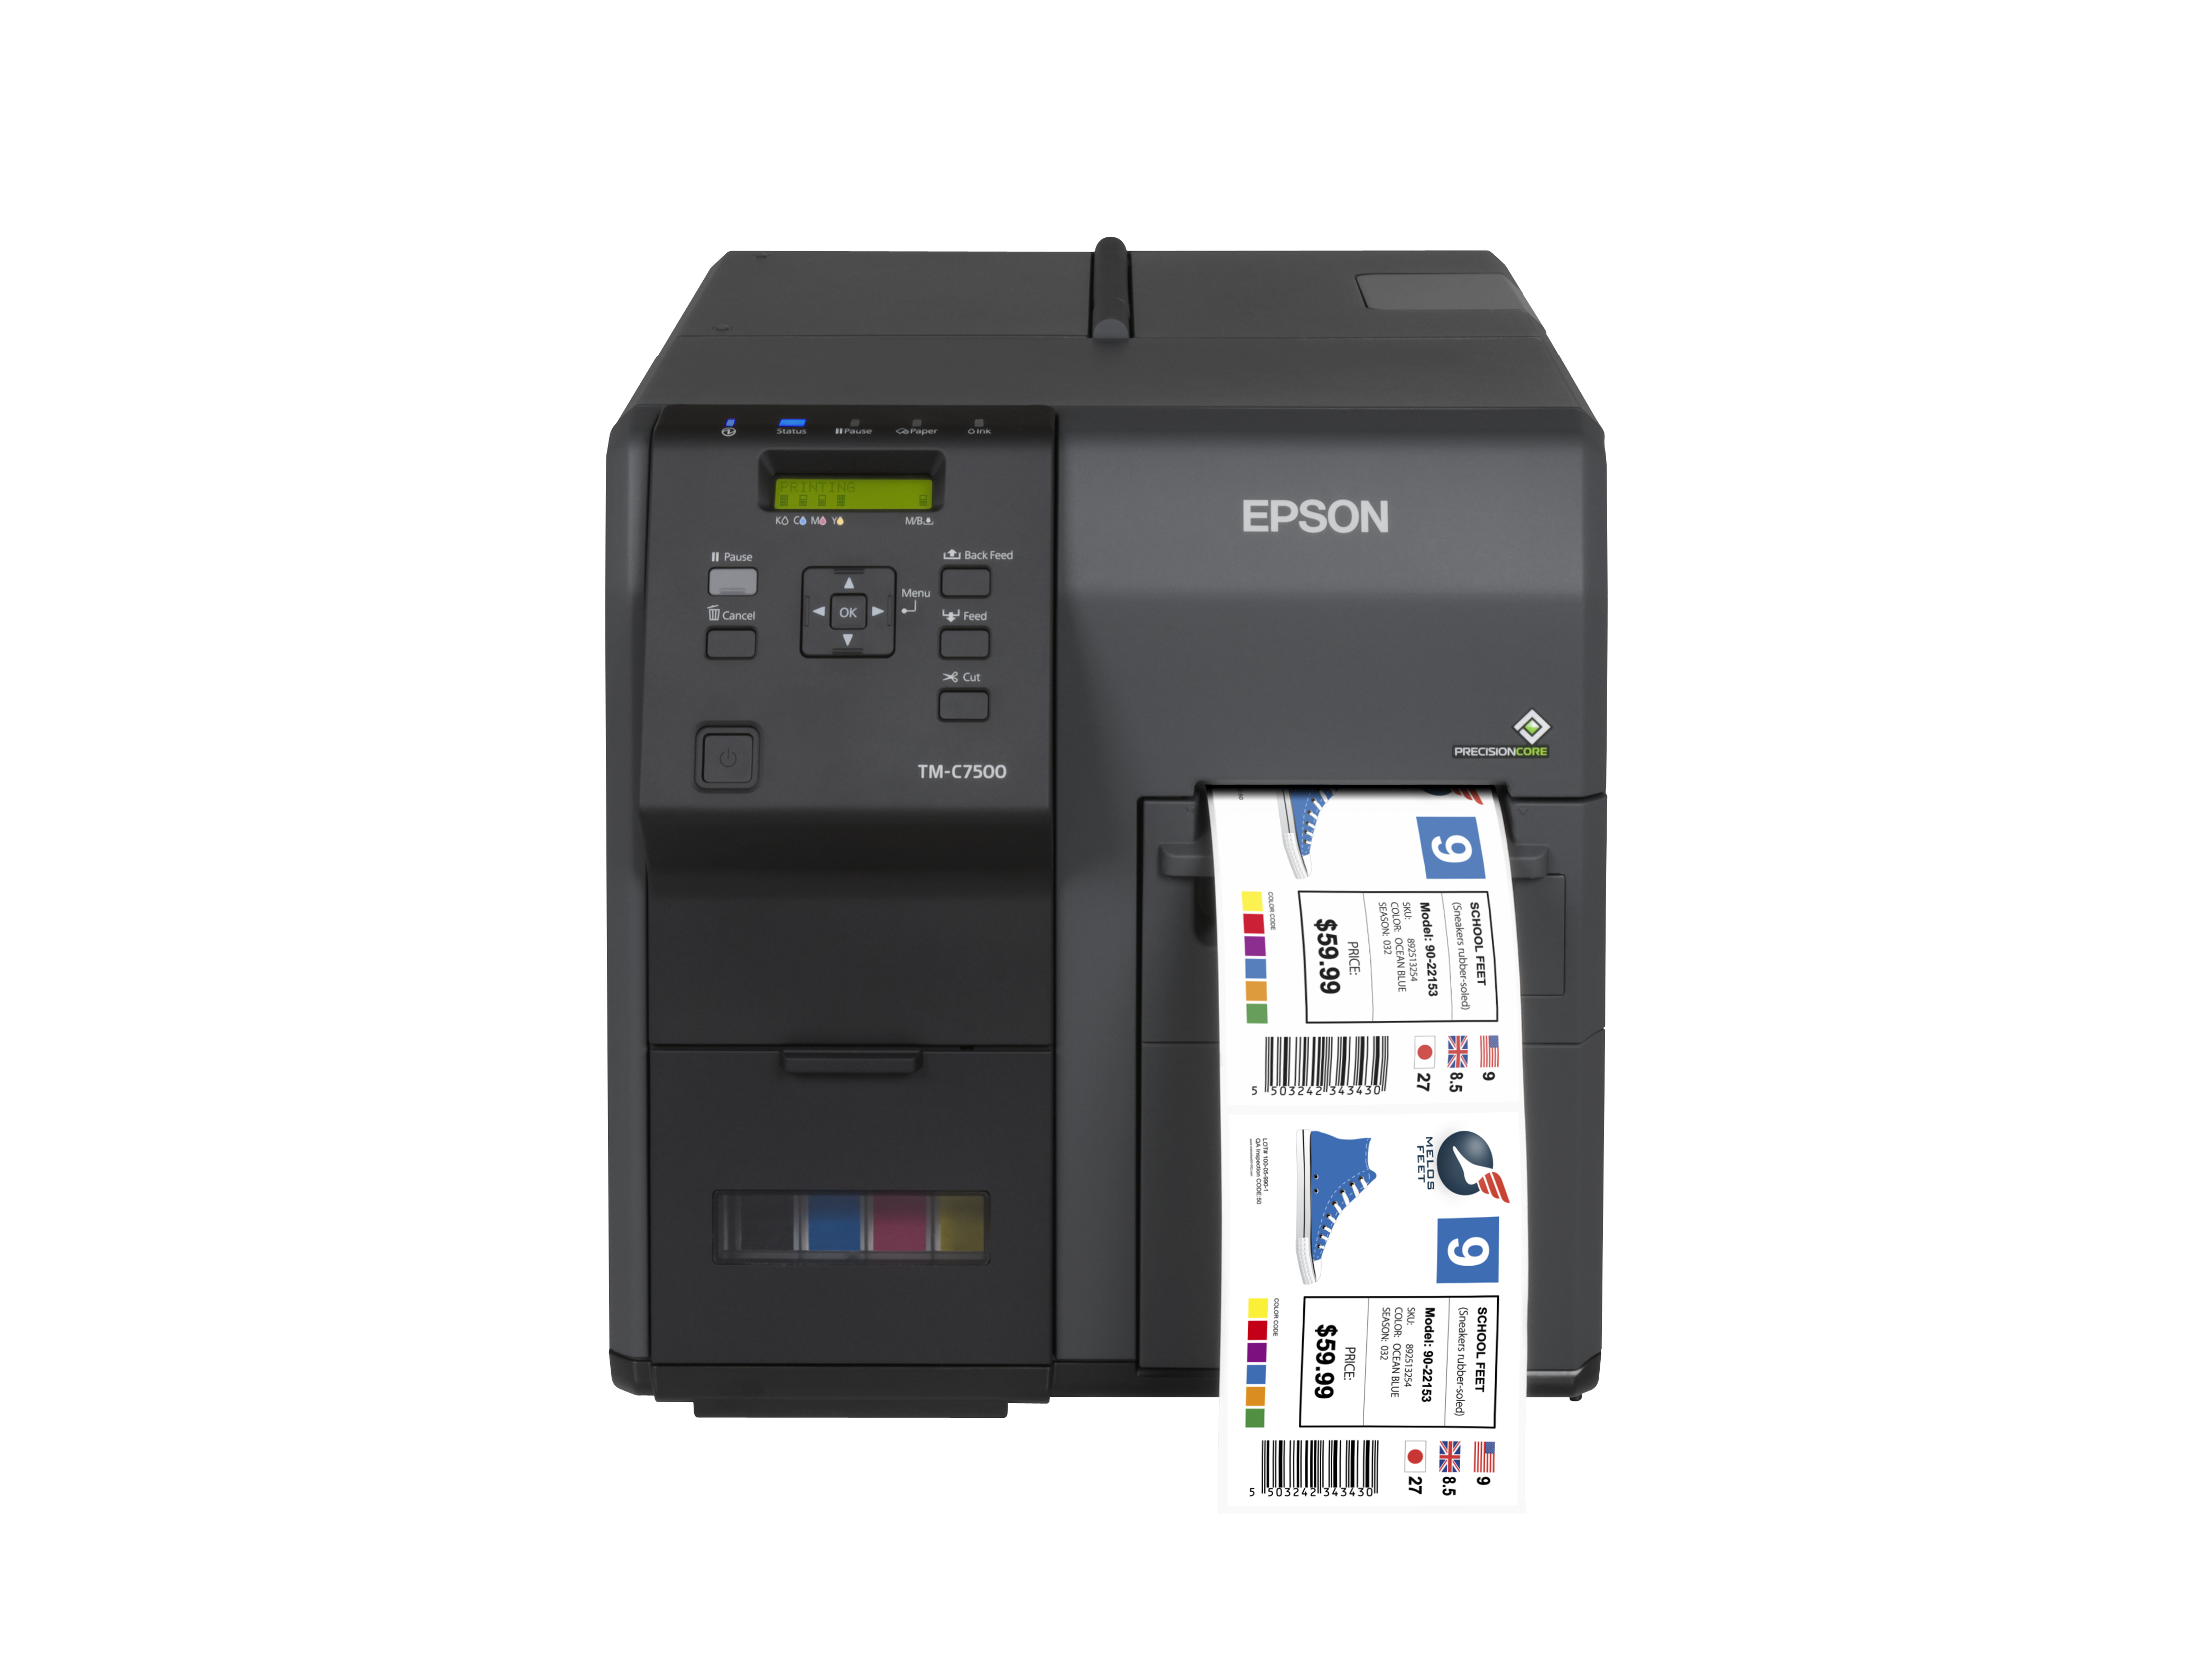 Epson ColorWorks C7500